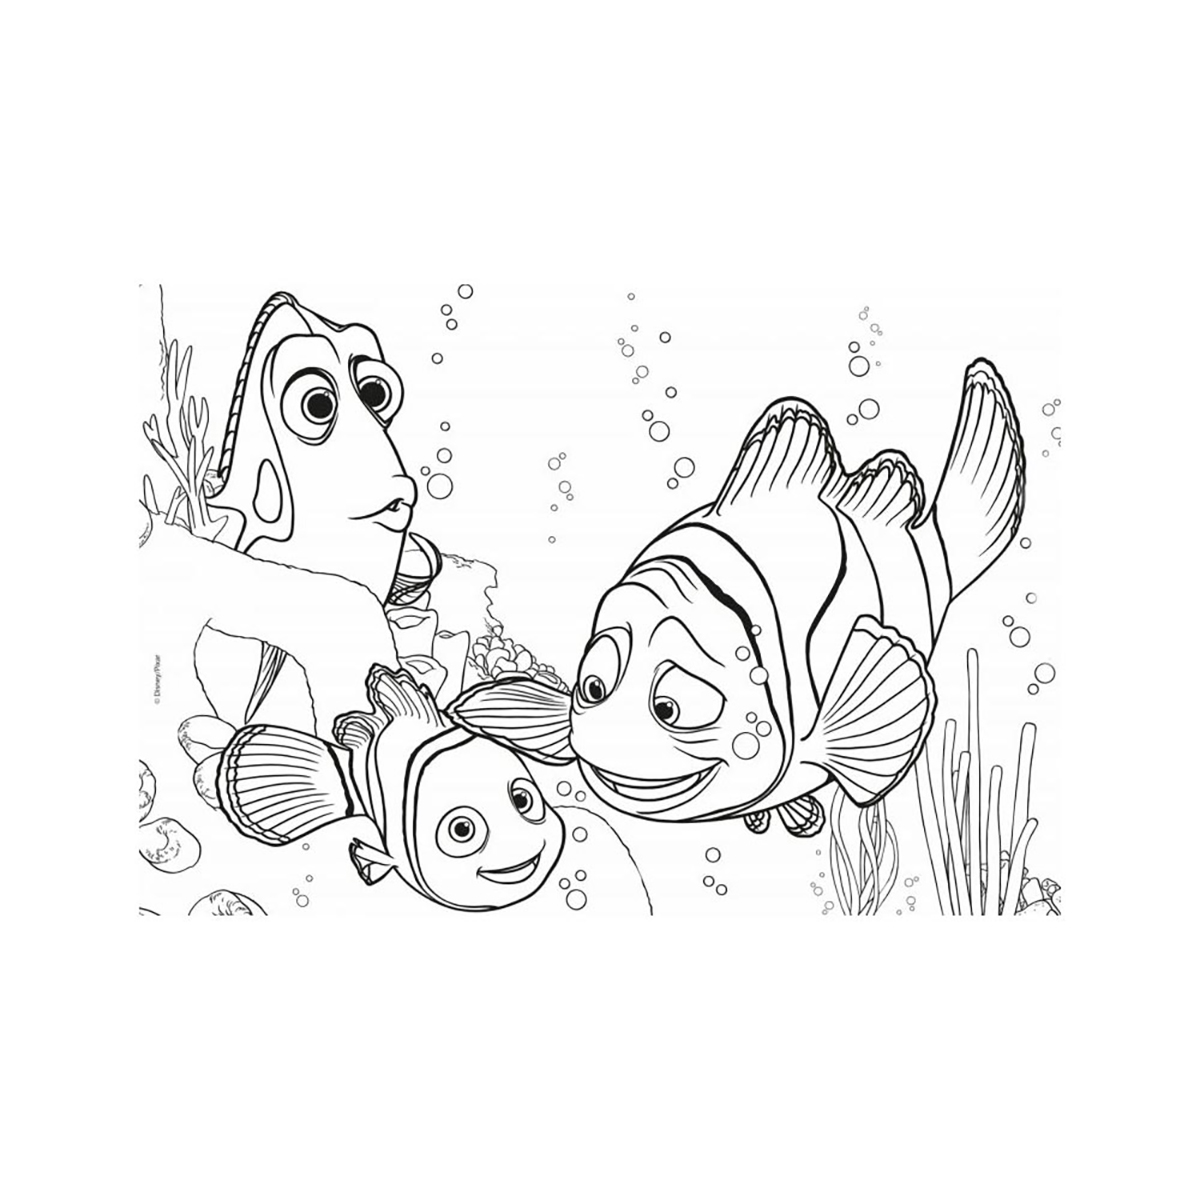 DISNEY Ausmal-Puzzle in Tragebox 60 Lisciani Teile, von Nemo Findet Puzzle